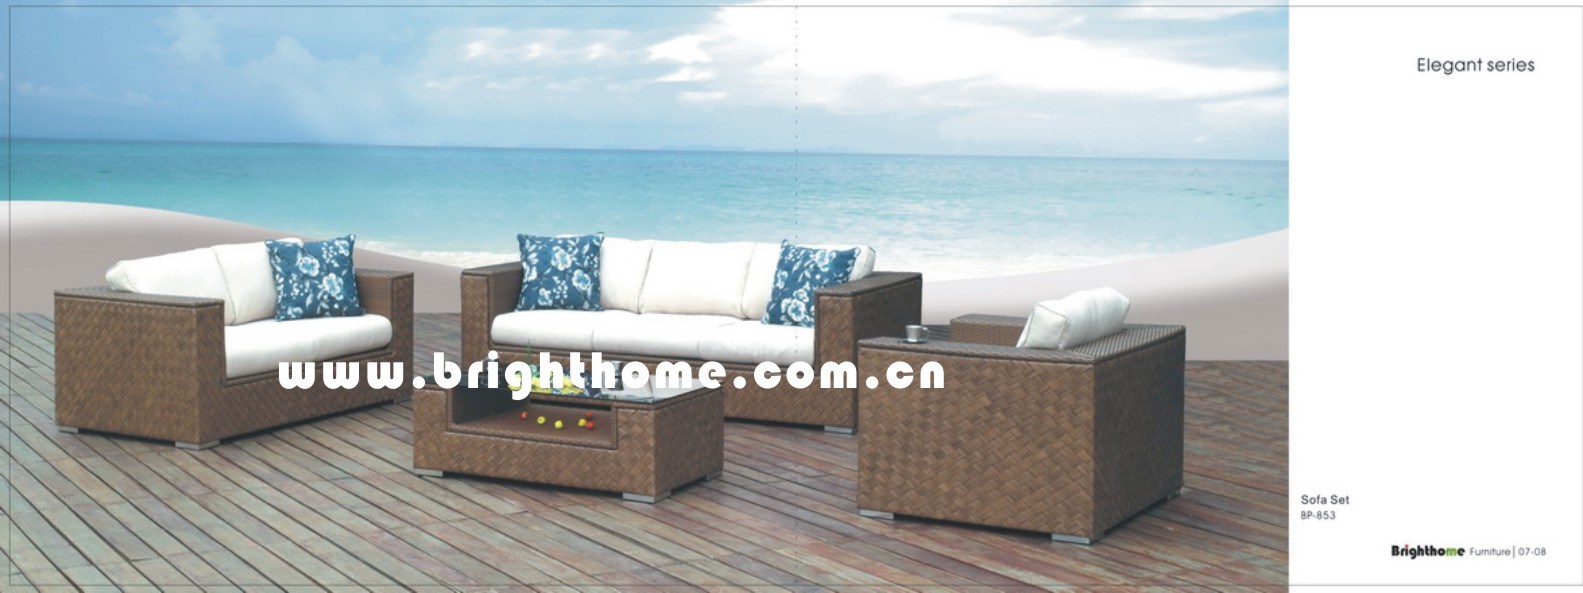 Excellent Design Wicker Outdoor Furniture Sofa Set